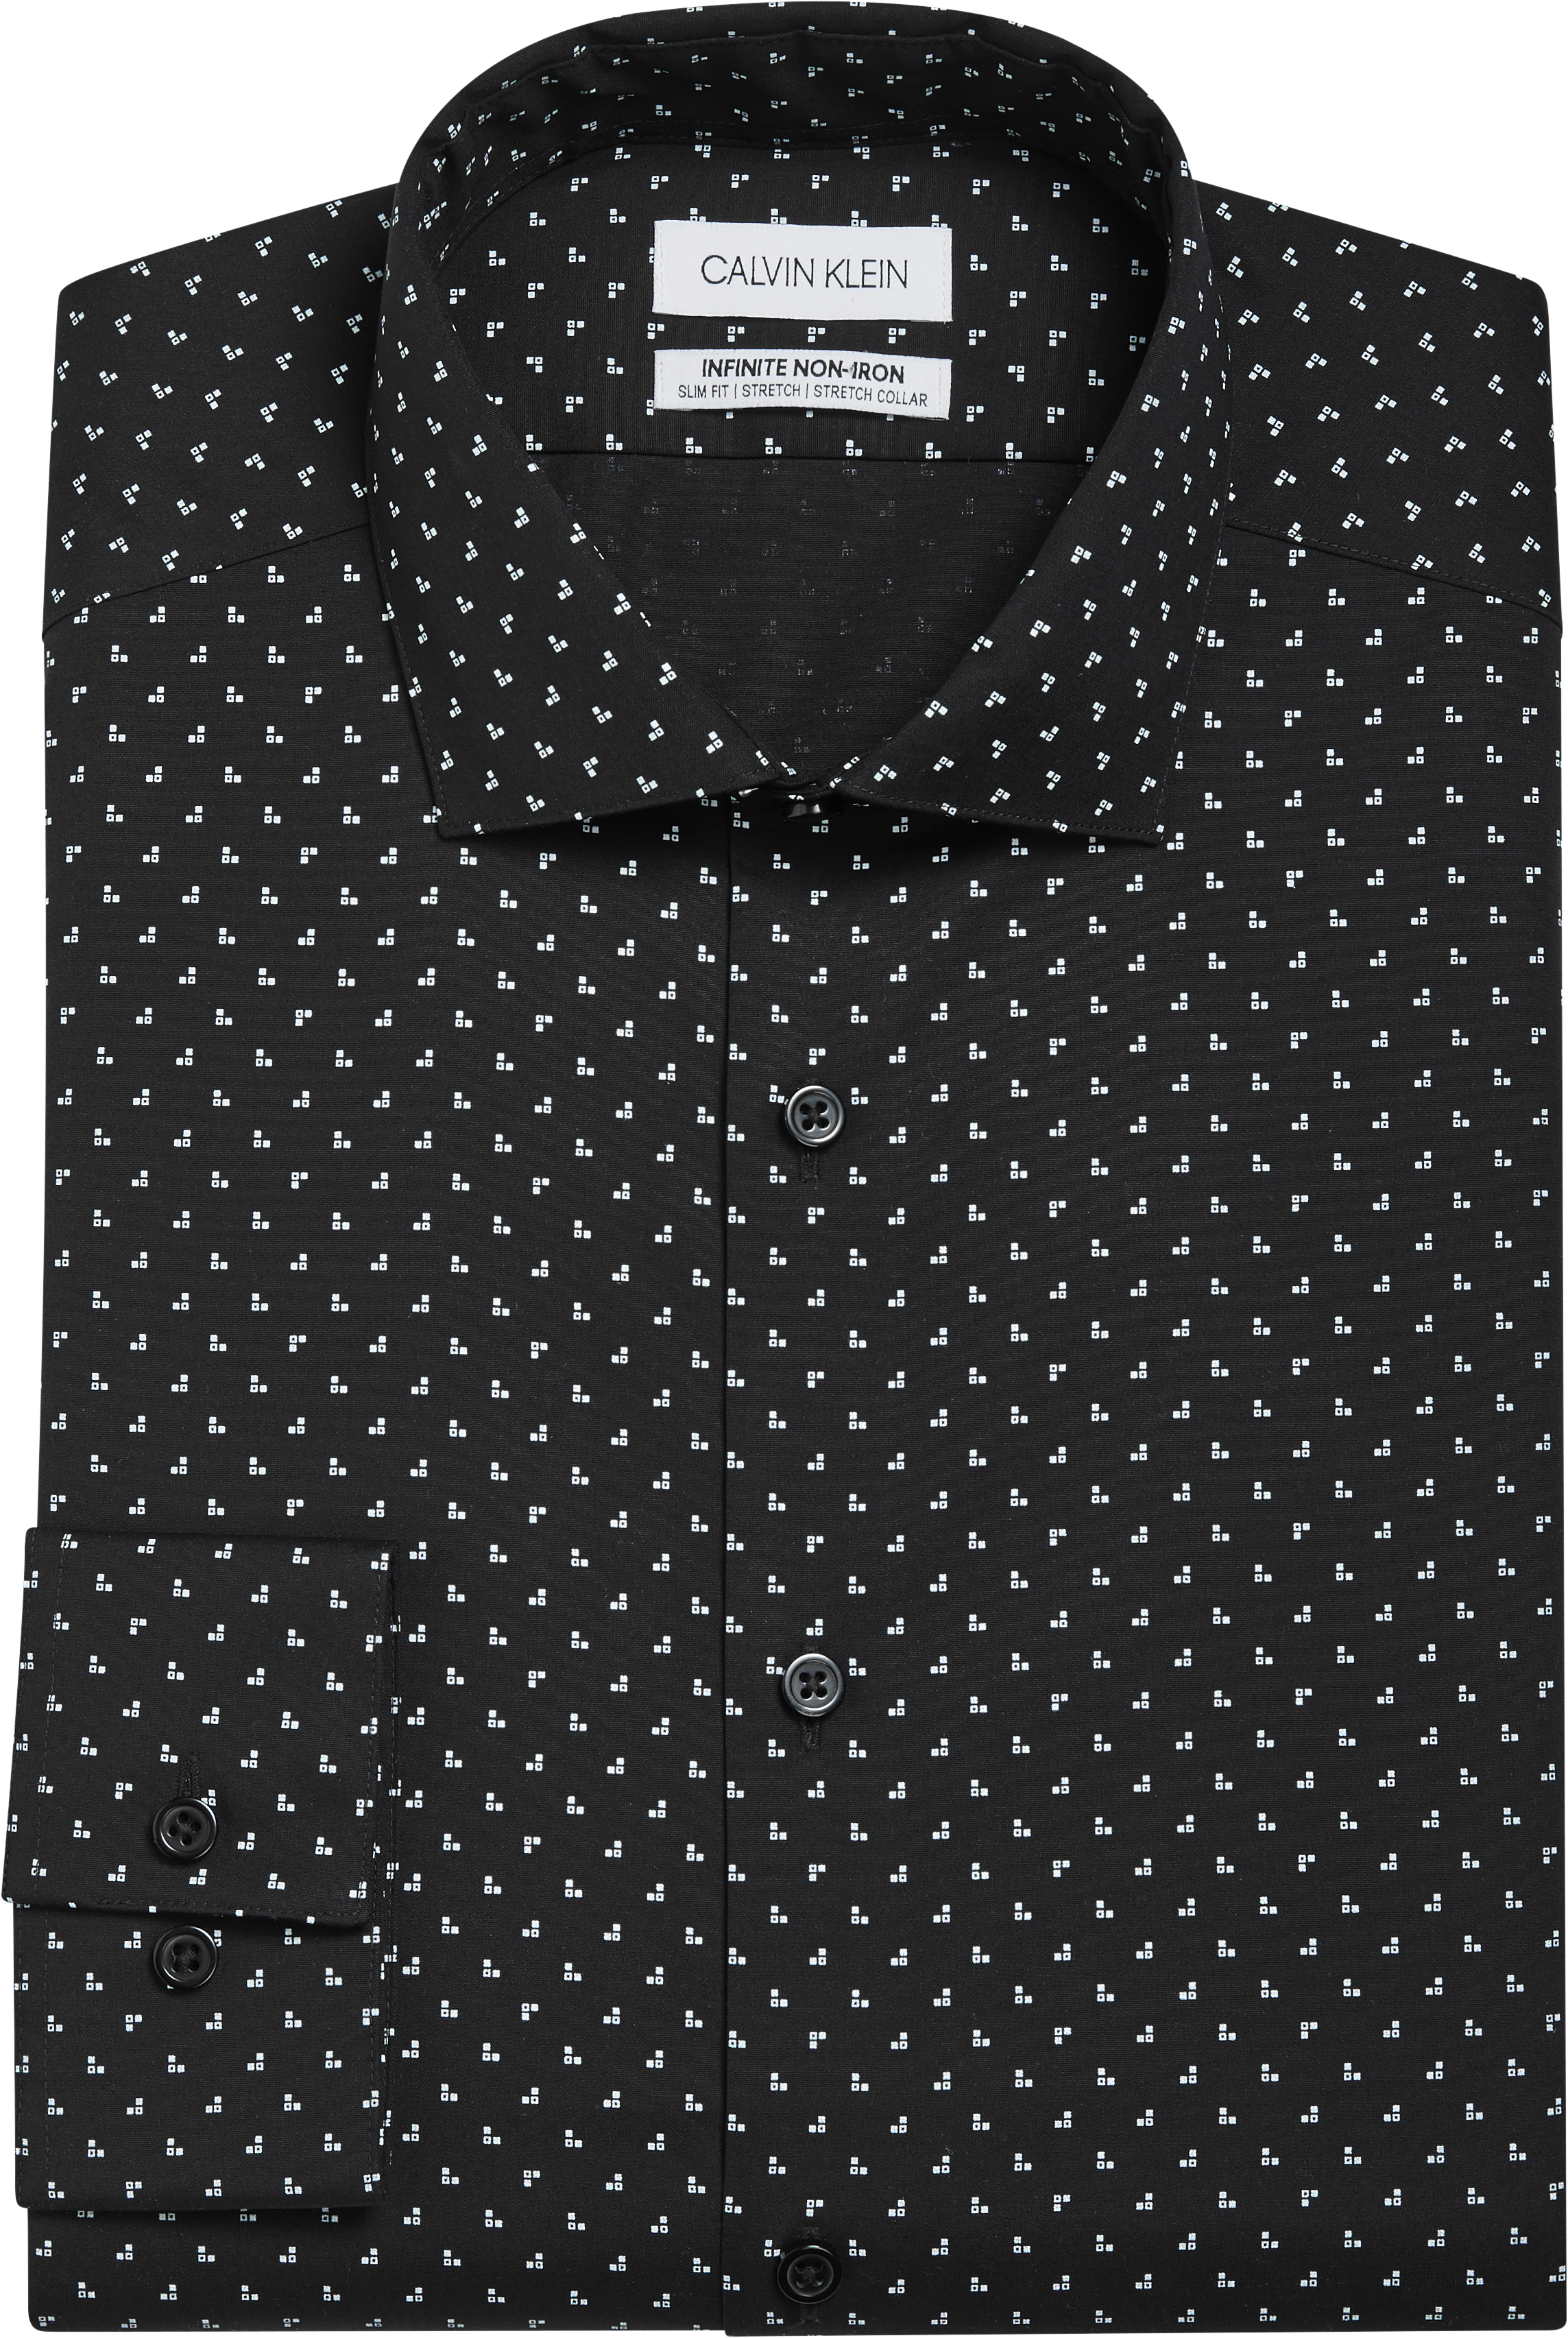 Calvin Klein Infinite Slim Fit Dress Shirt, Black Print - Men's Sale ...